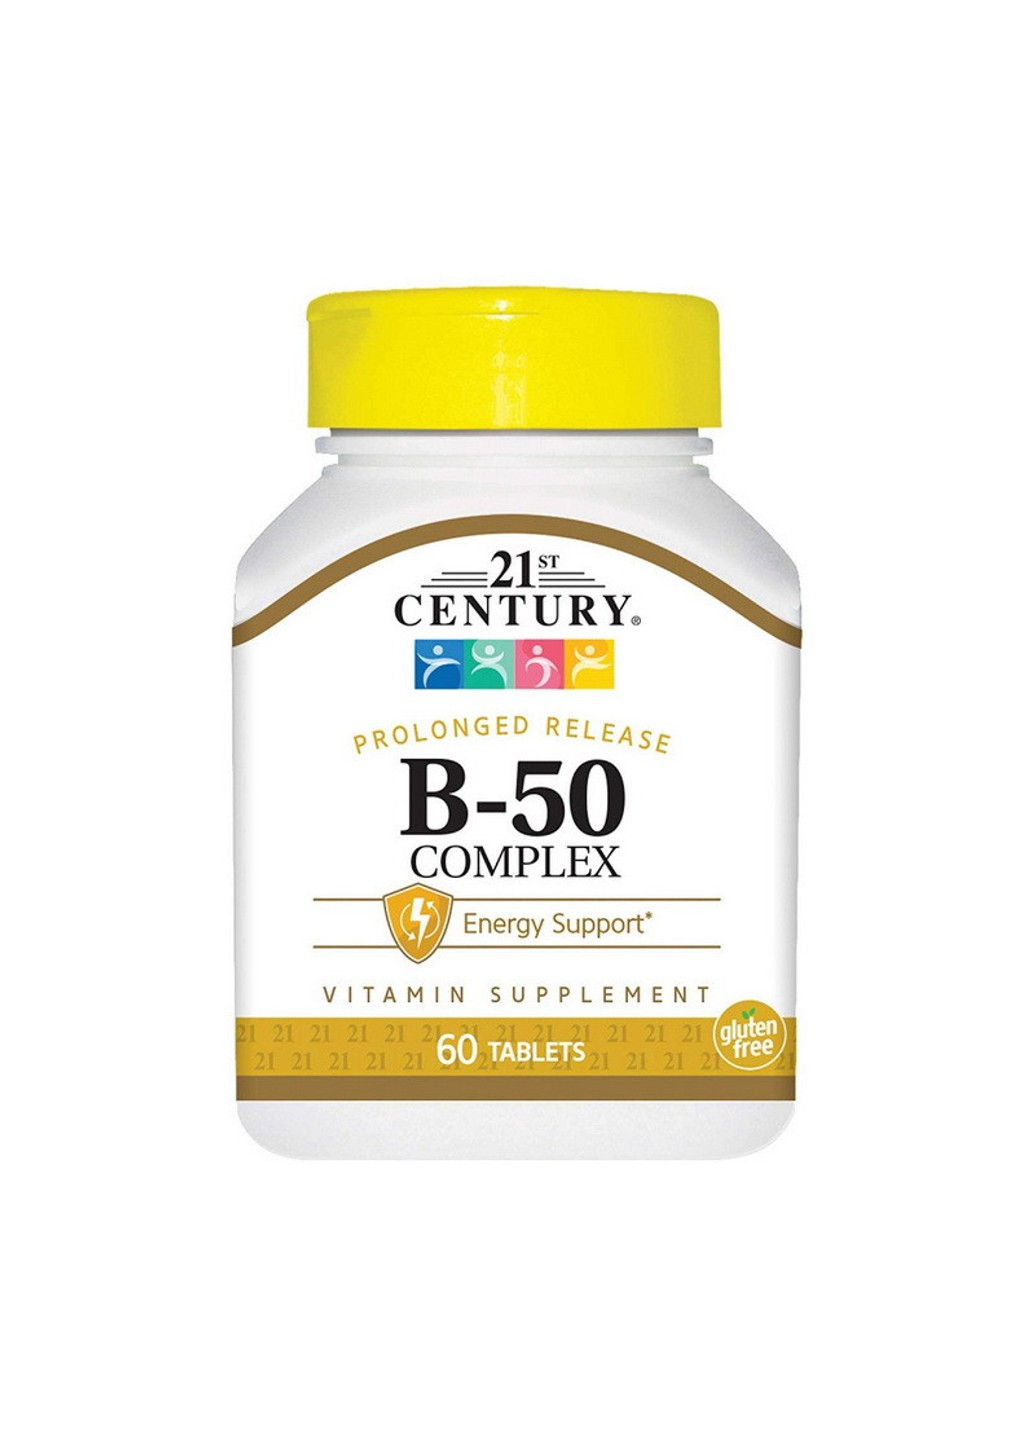 Комплекс витаминов группы Б-50 B-50 Complex (60 таблеток) 21 центури 21st Century (255408485)